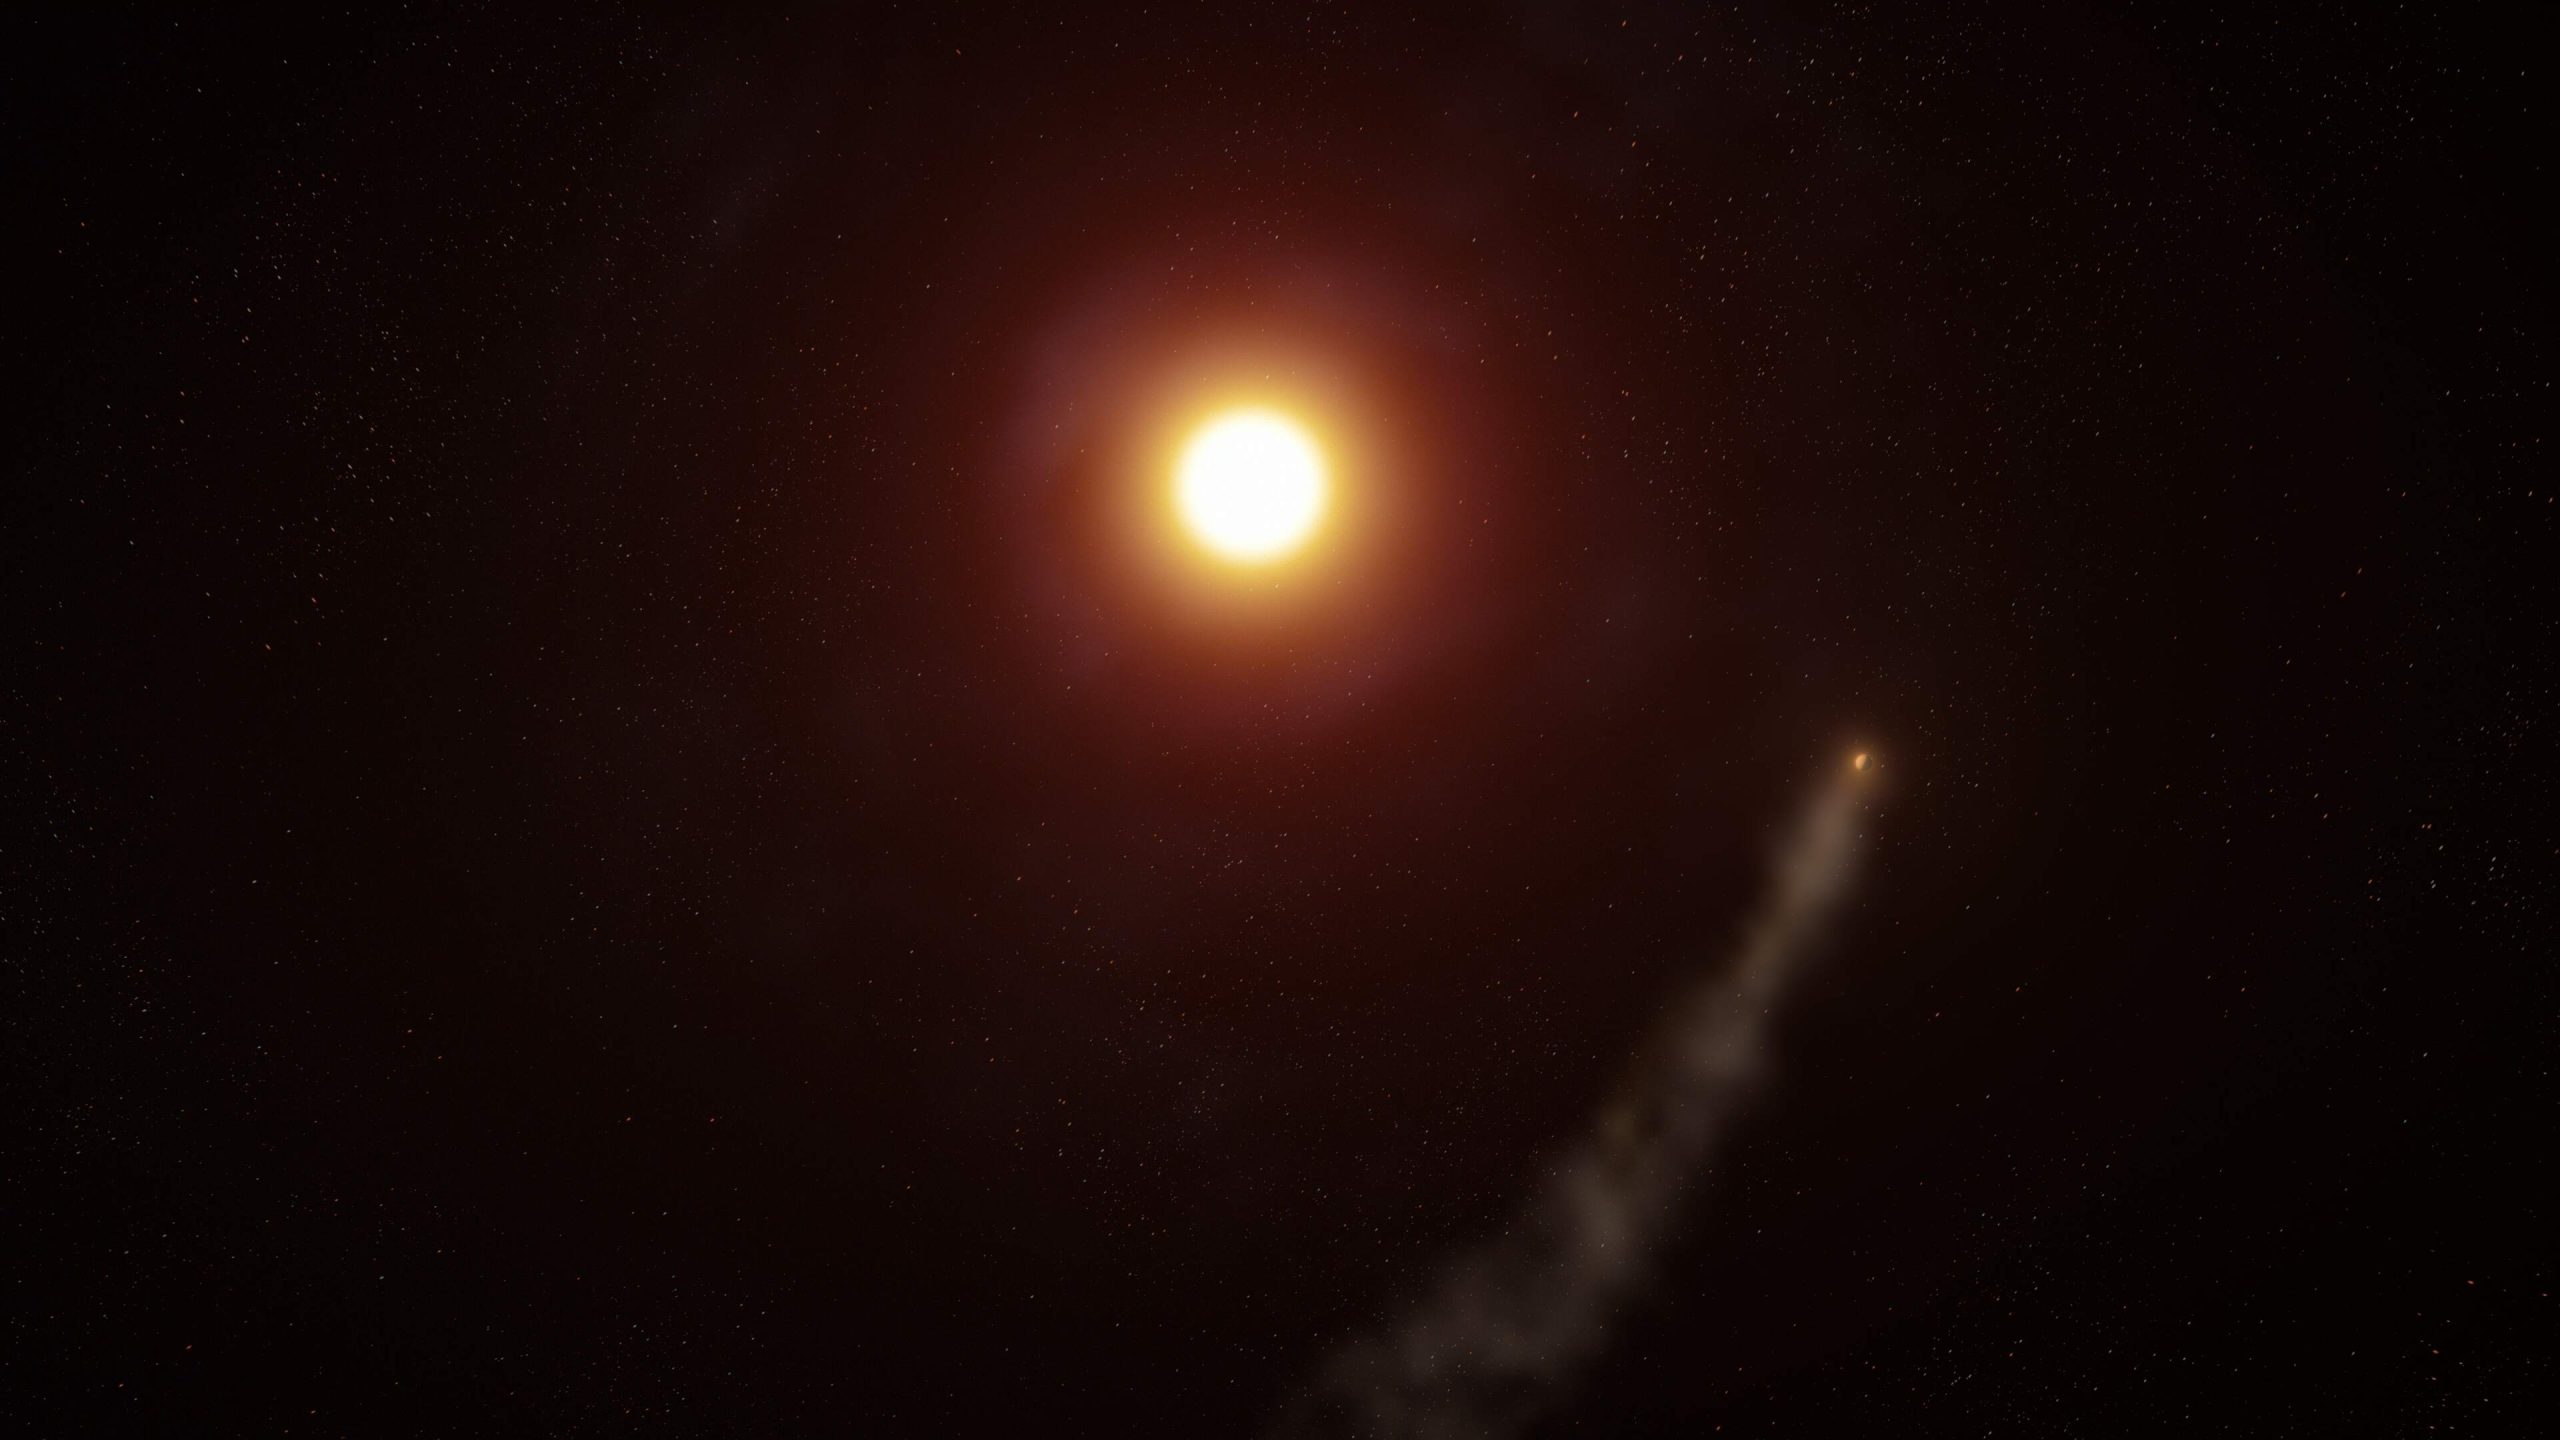 an artist's impression of exoplanet wasp-69b orbiting its host star. Credit: W. M. Keck Observatory/Adam Makarenko